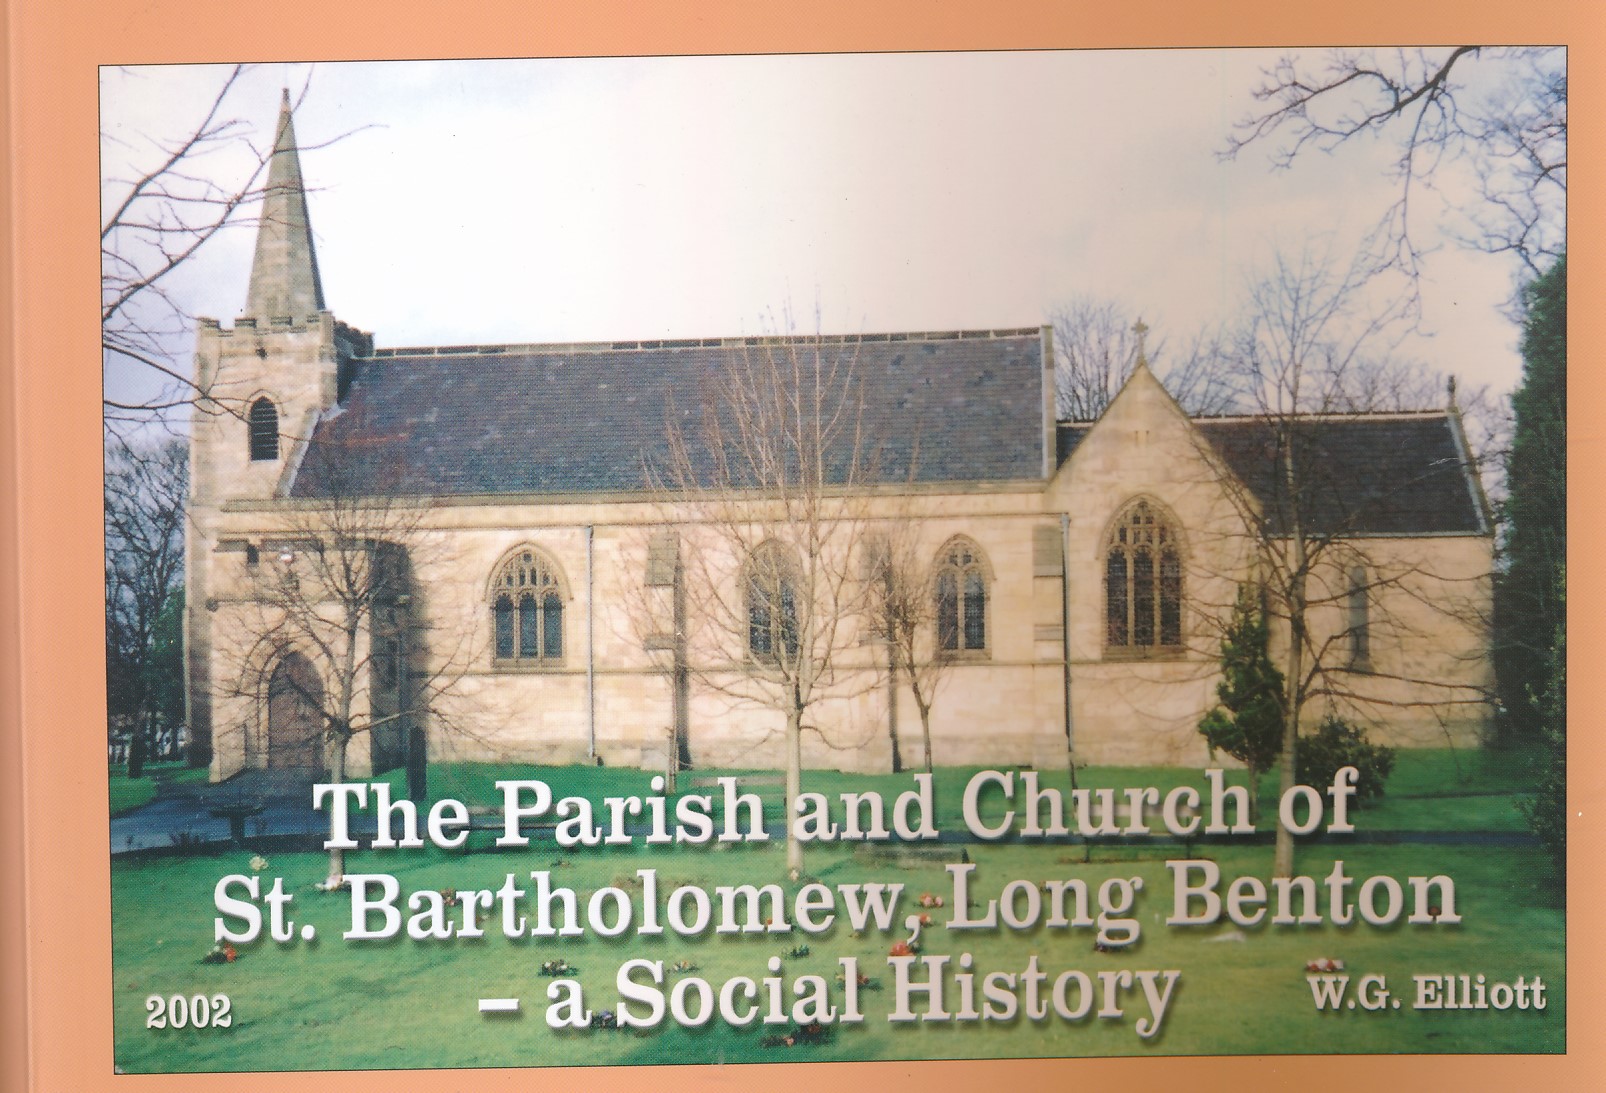 The Parish and Church of St. Bartholomew, Long Benton - A Social History.